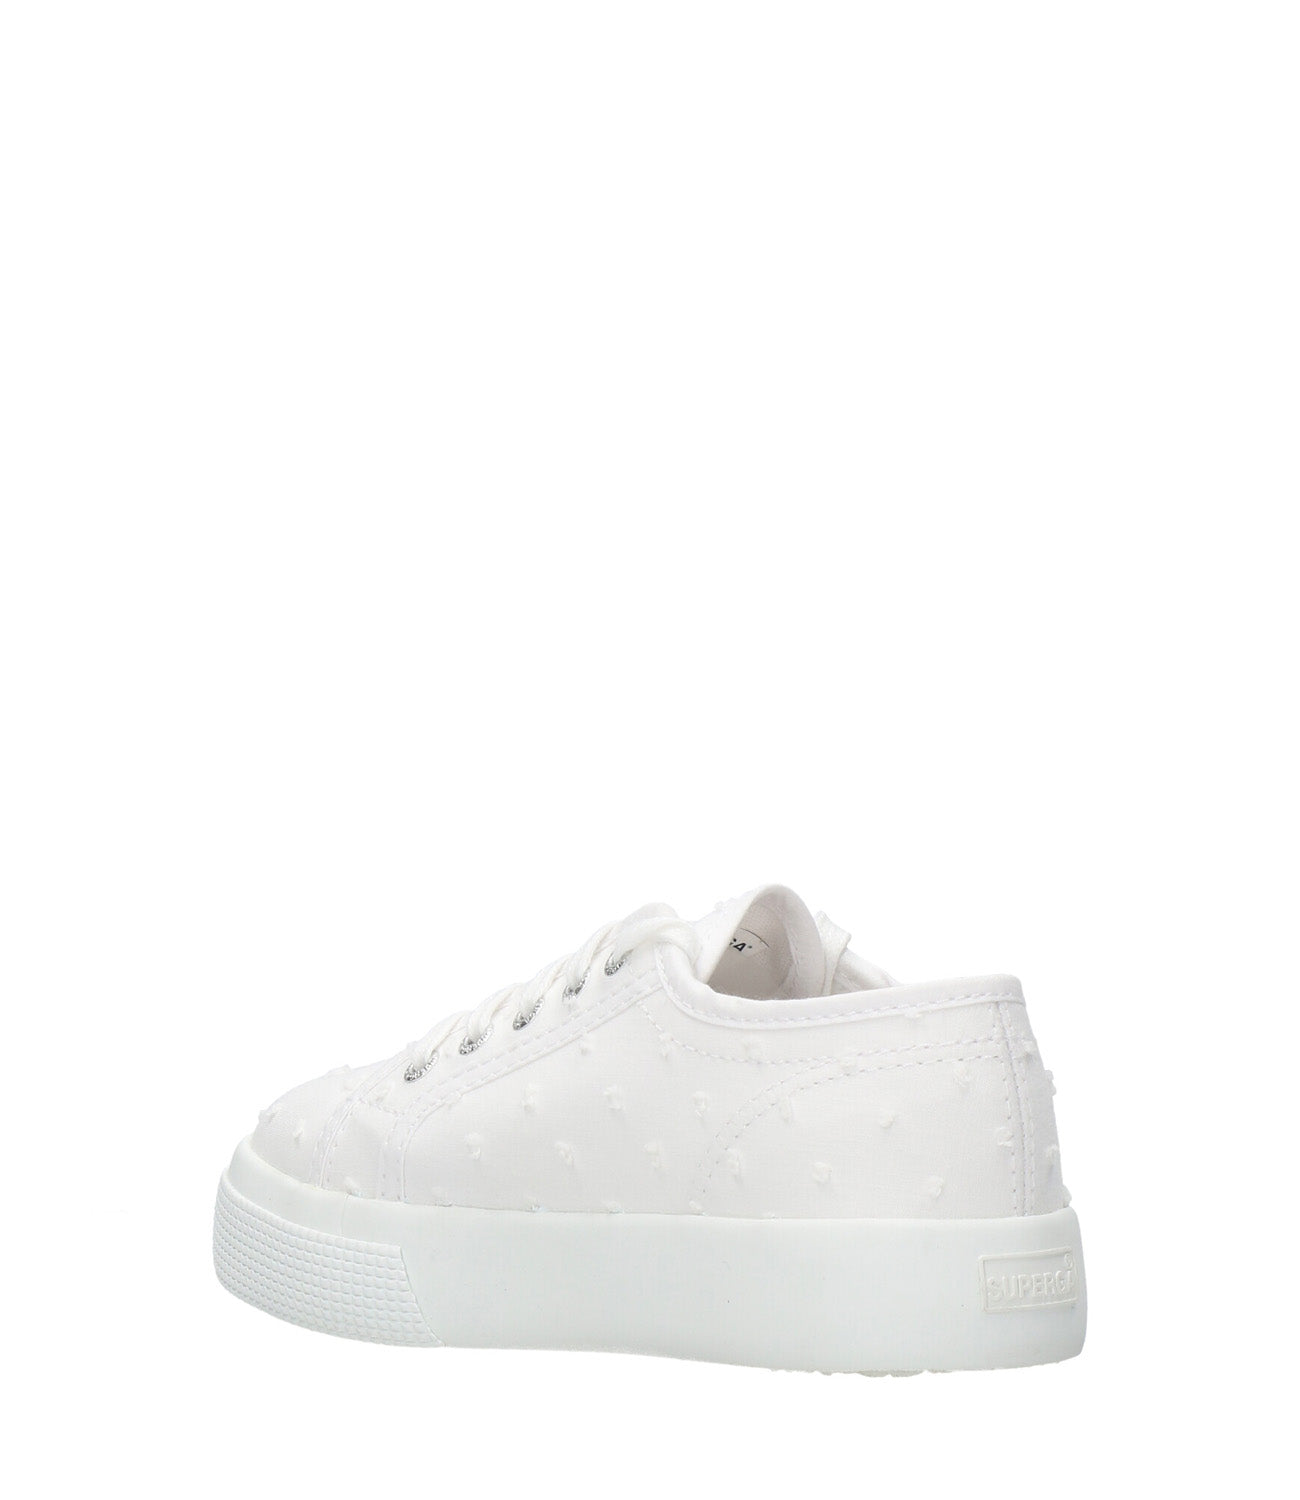 Superga | White platform sneakers